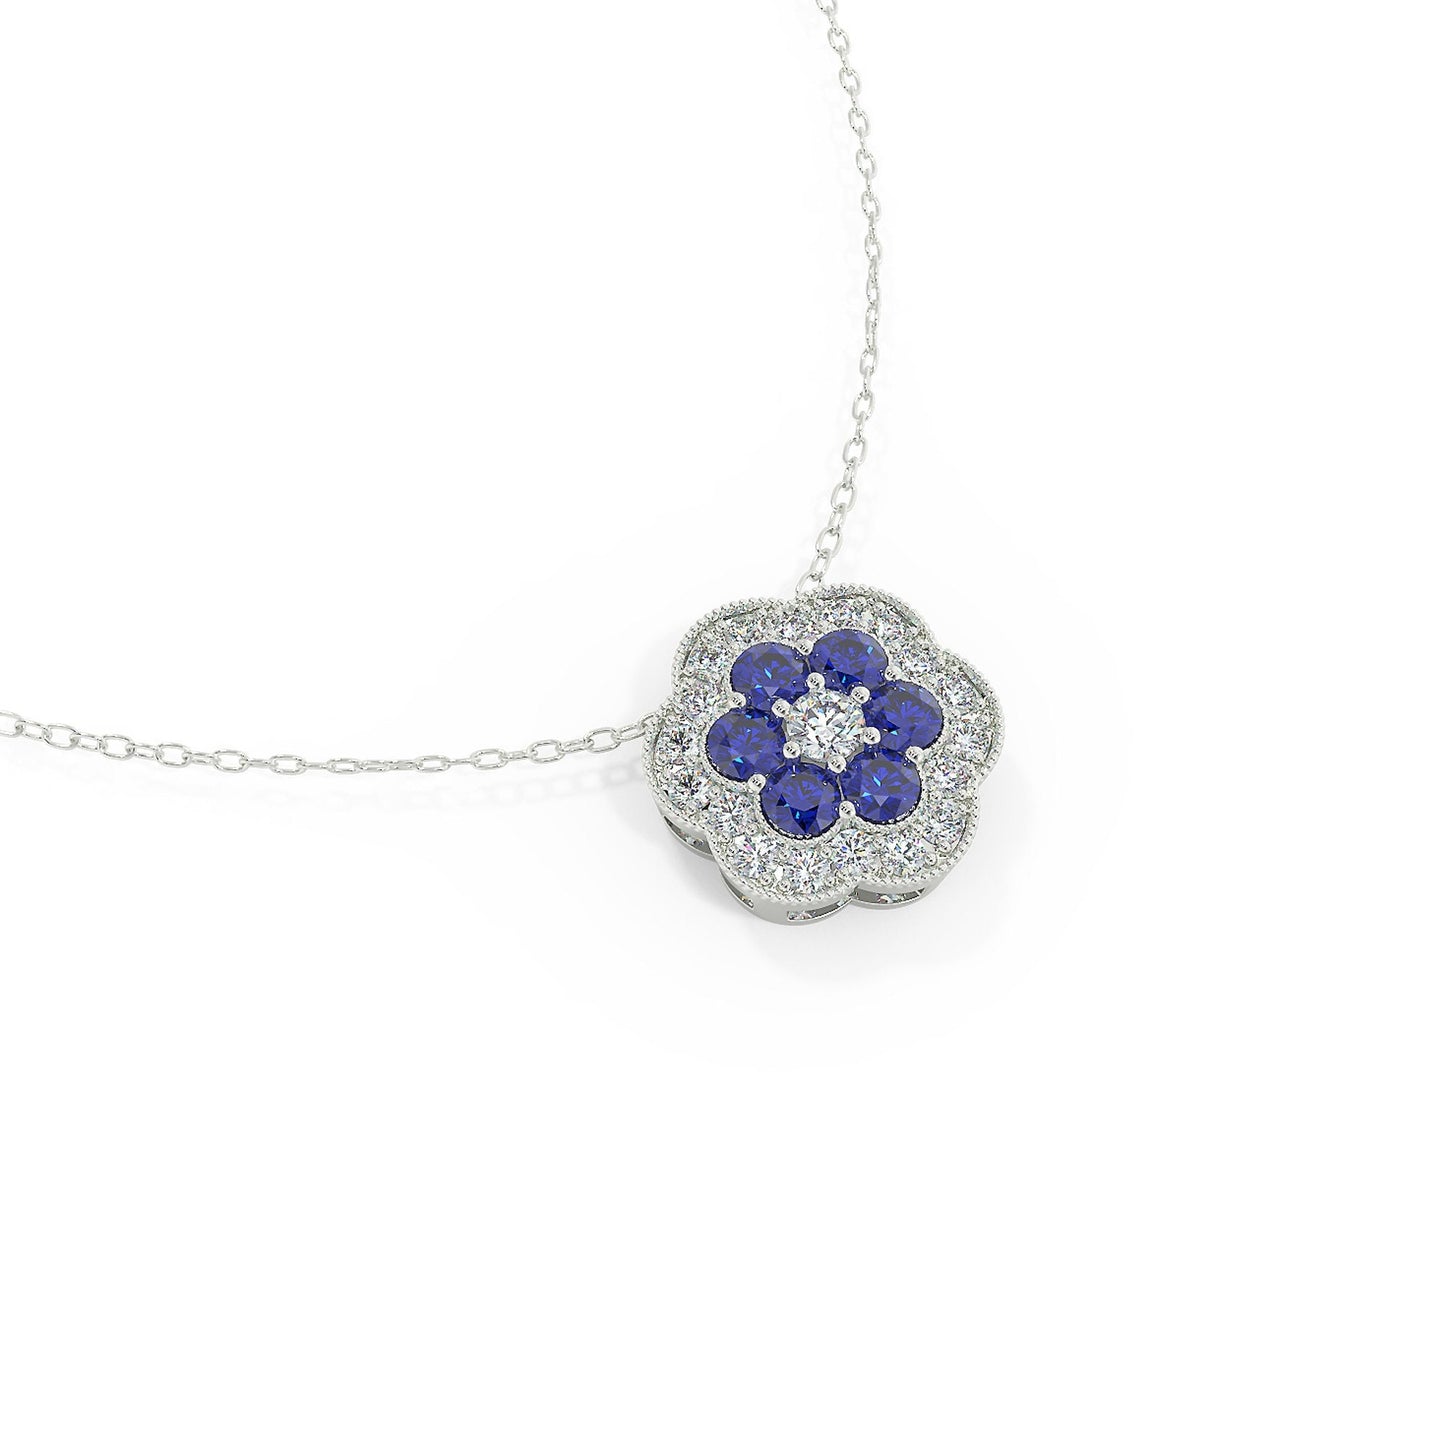 White Gold Necklace, Diamond Necklace, Blue Sapphire Necklace,  White gold Pendant, Flower Necklace, Diamond Flower Pendant, Dainty necklace